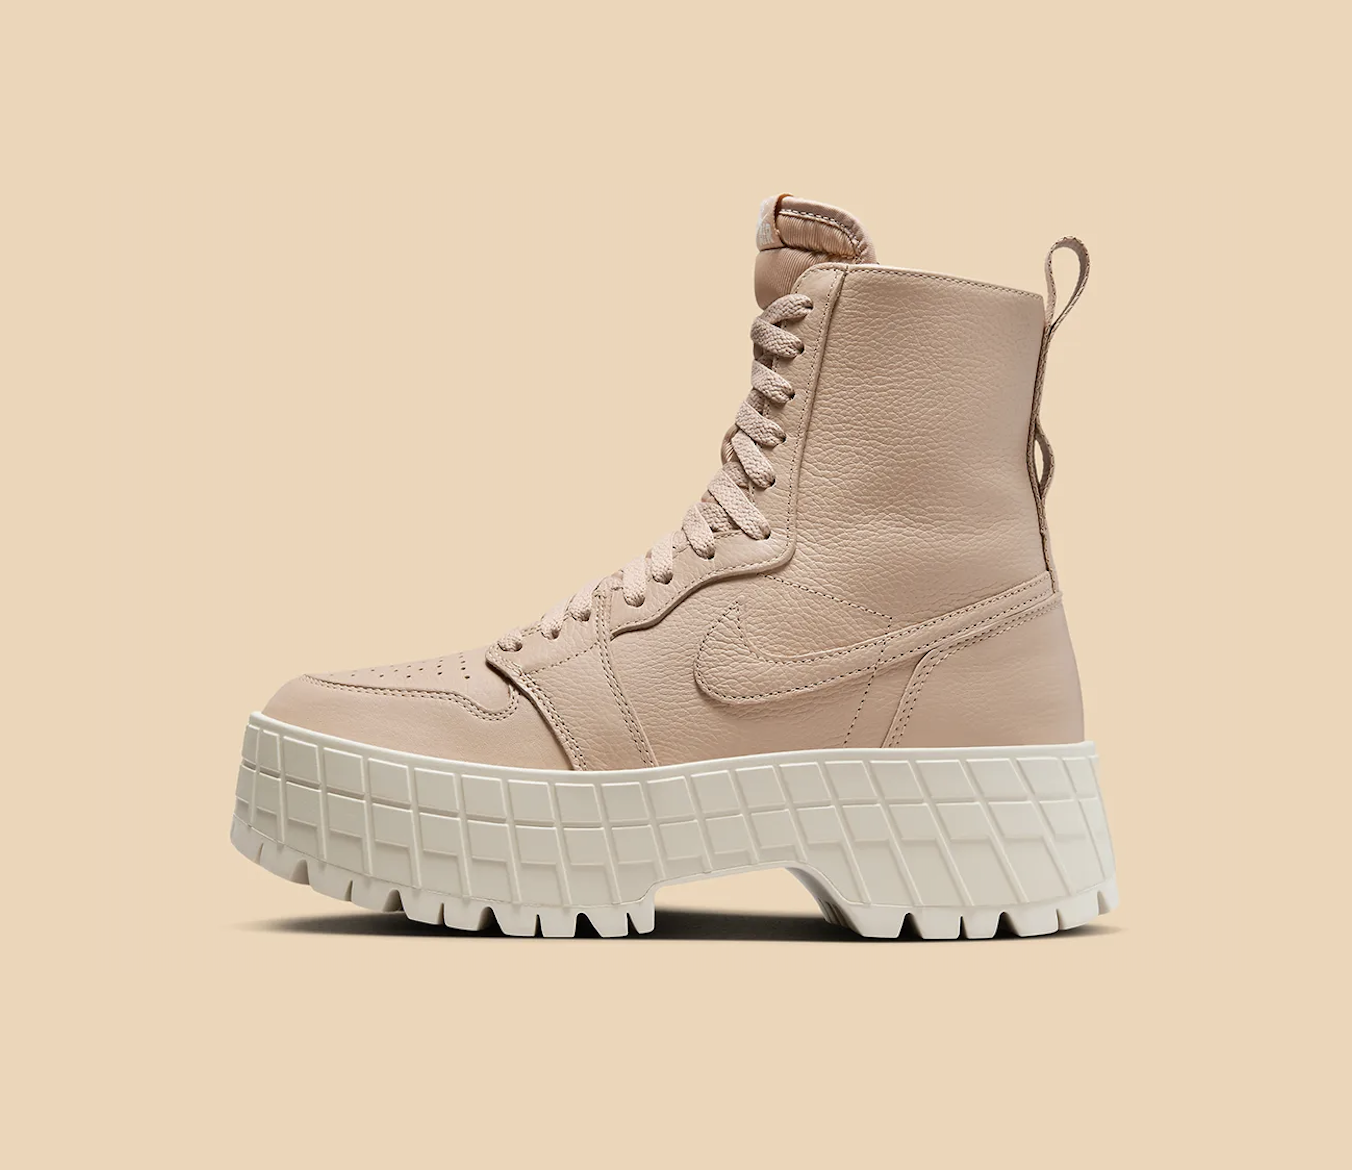 The Air Jordan 1 Brooklyn Appears In Tan | SneakerNews.com